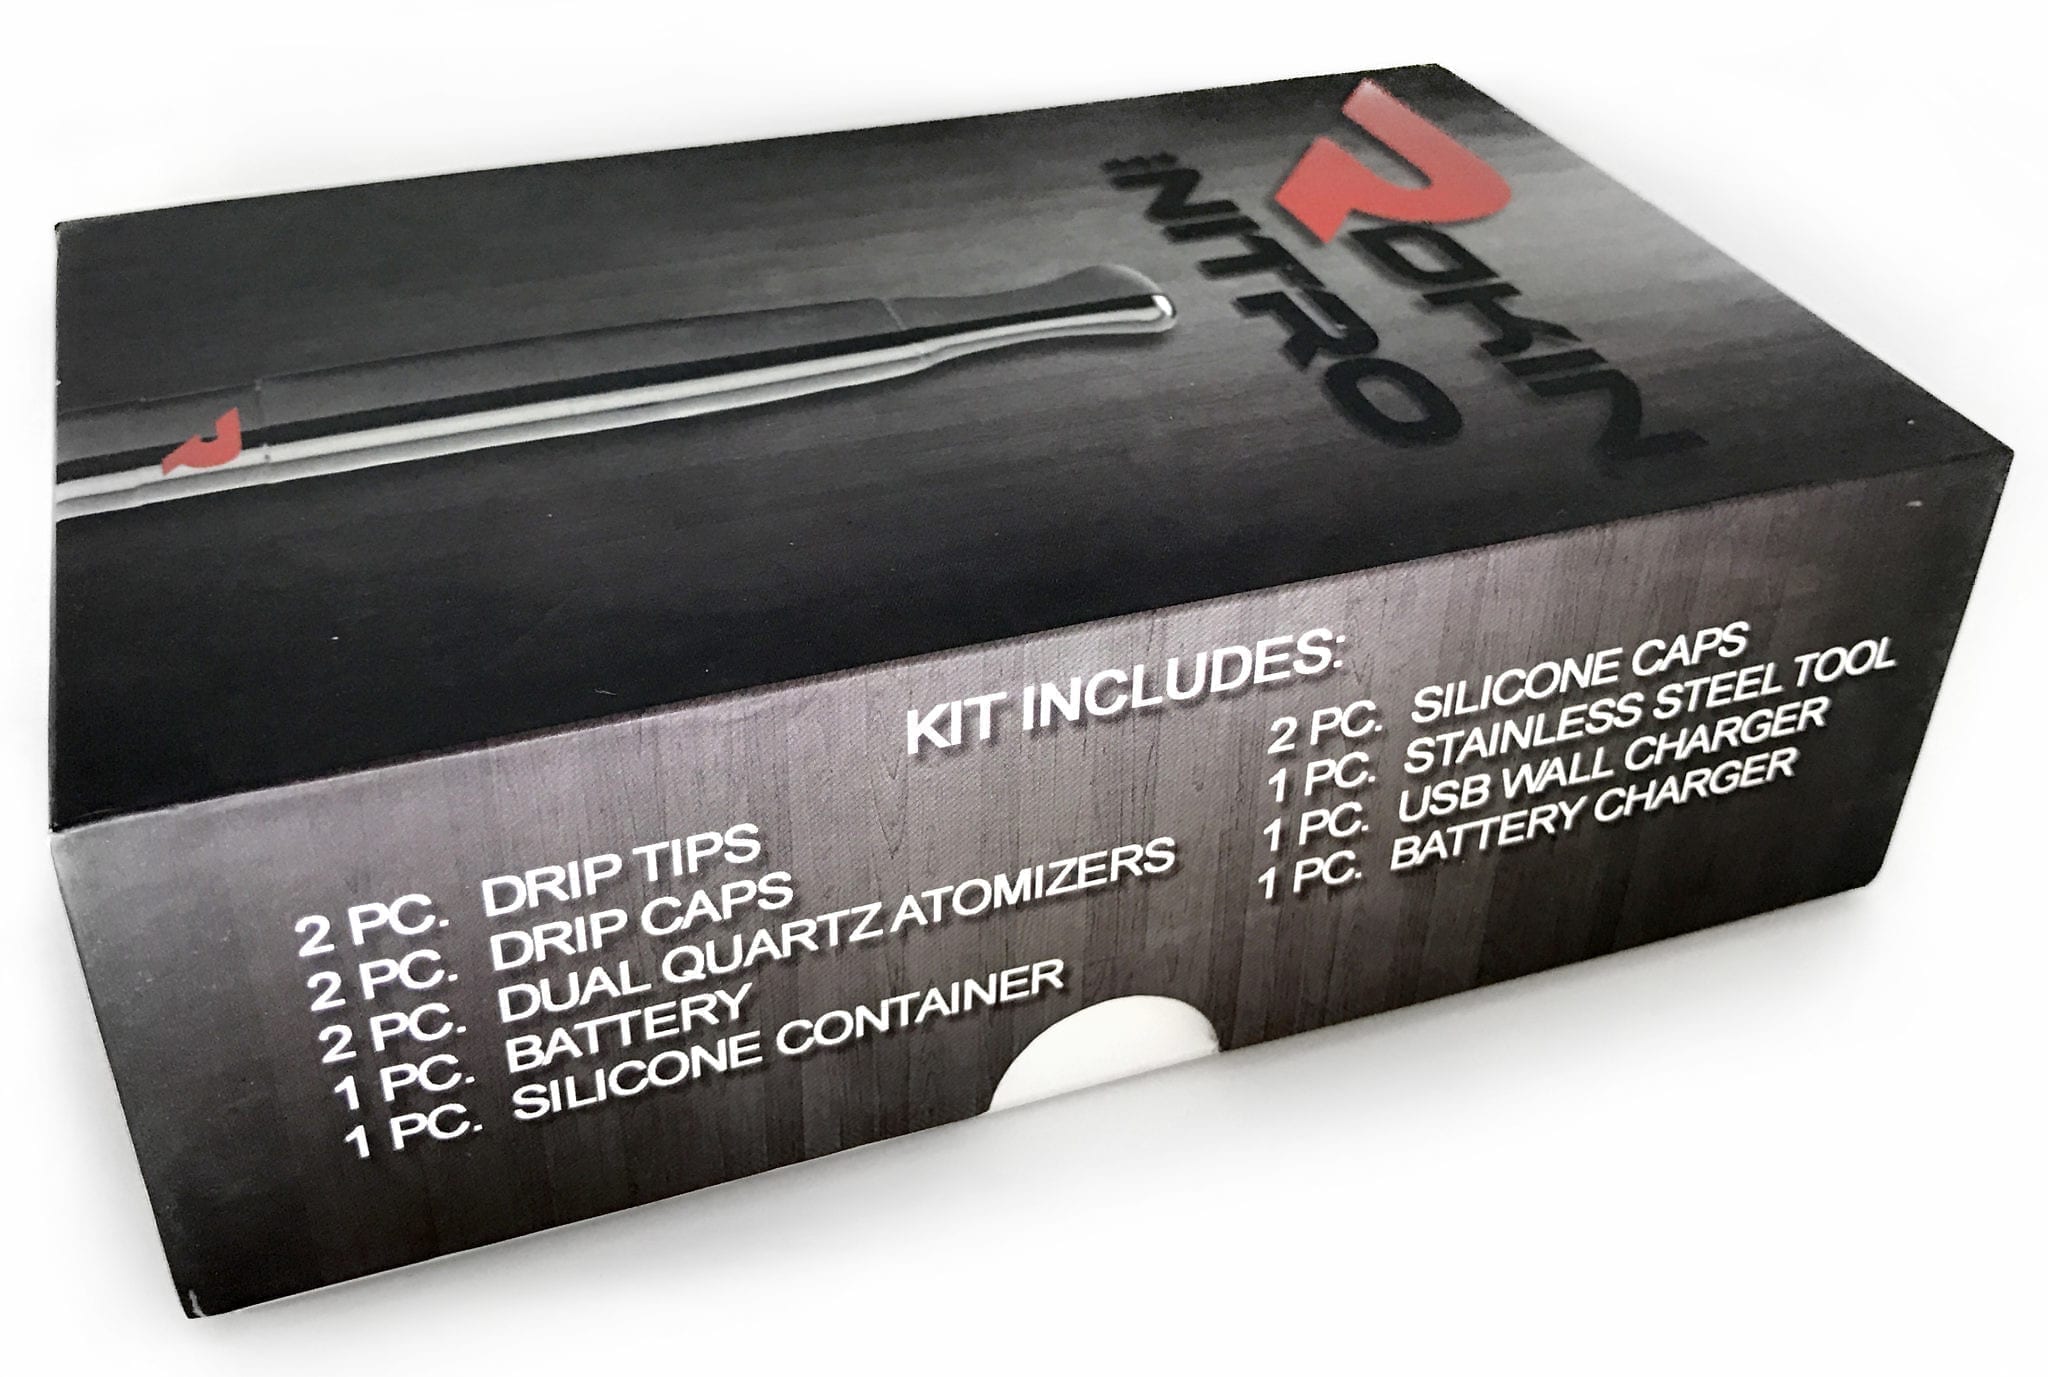 Contents Of The Rokin Nitro Vaporizer Kit